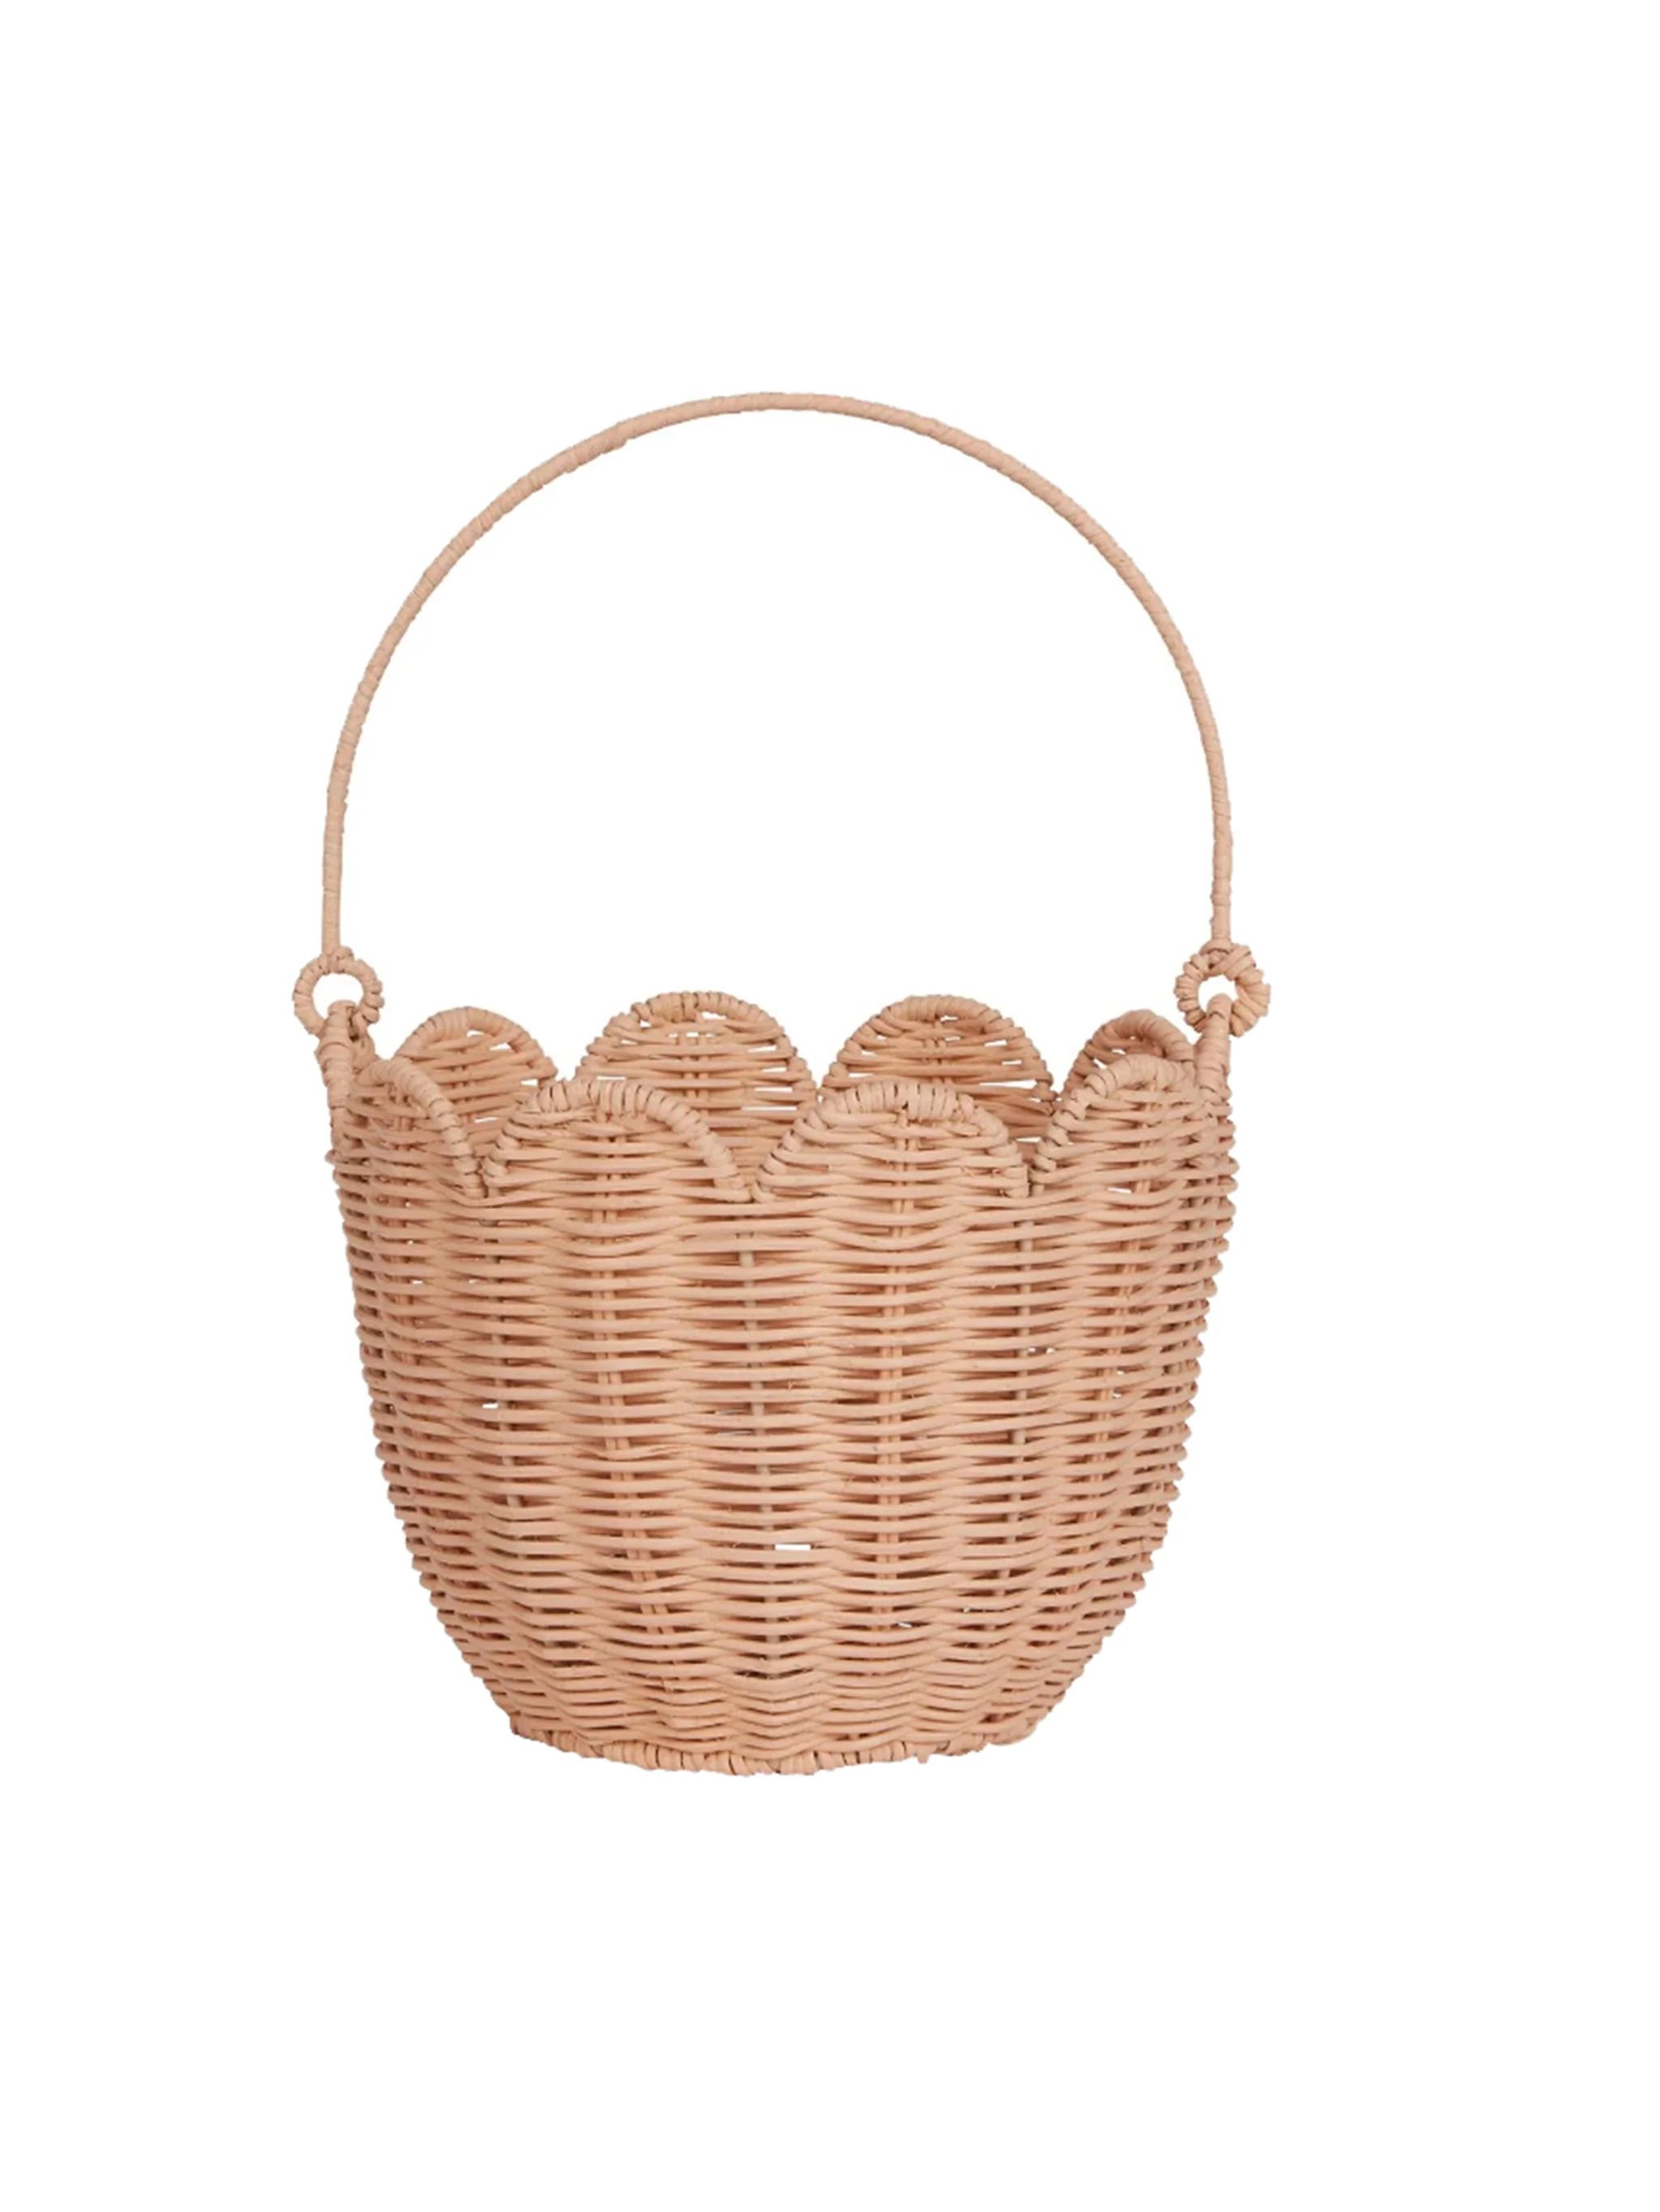 Olli Ella Rattan Tulip Carry Basket | Weston Table